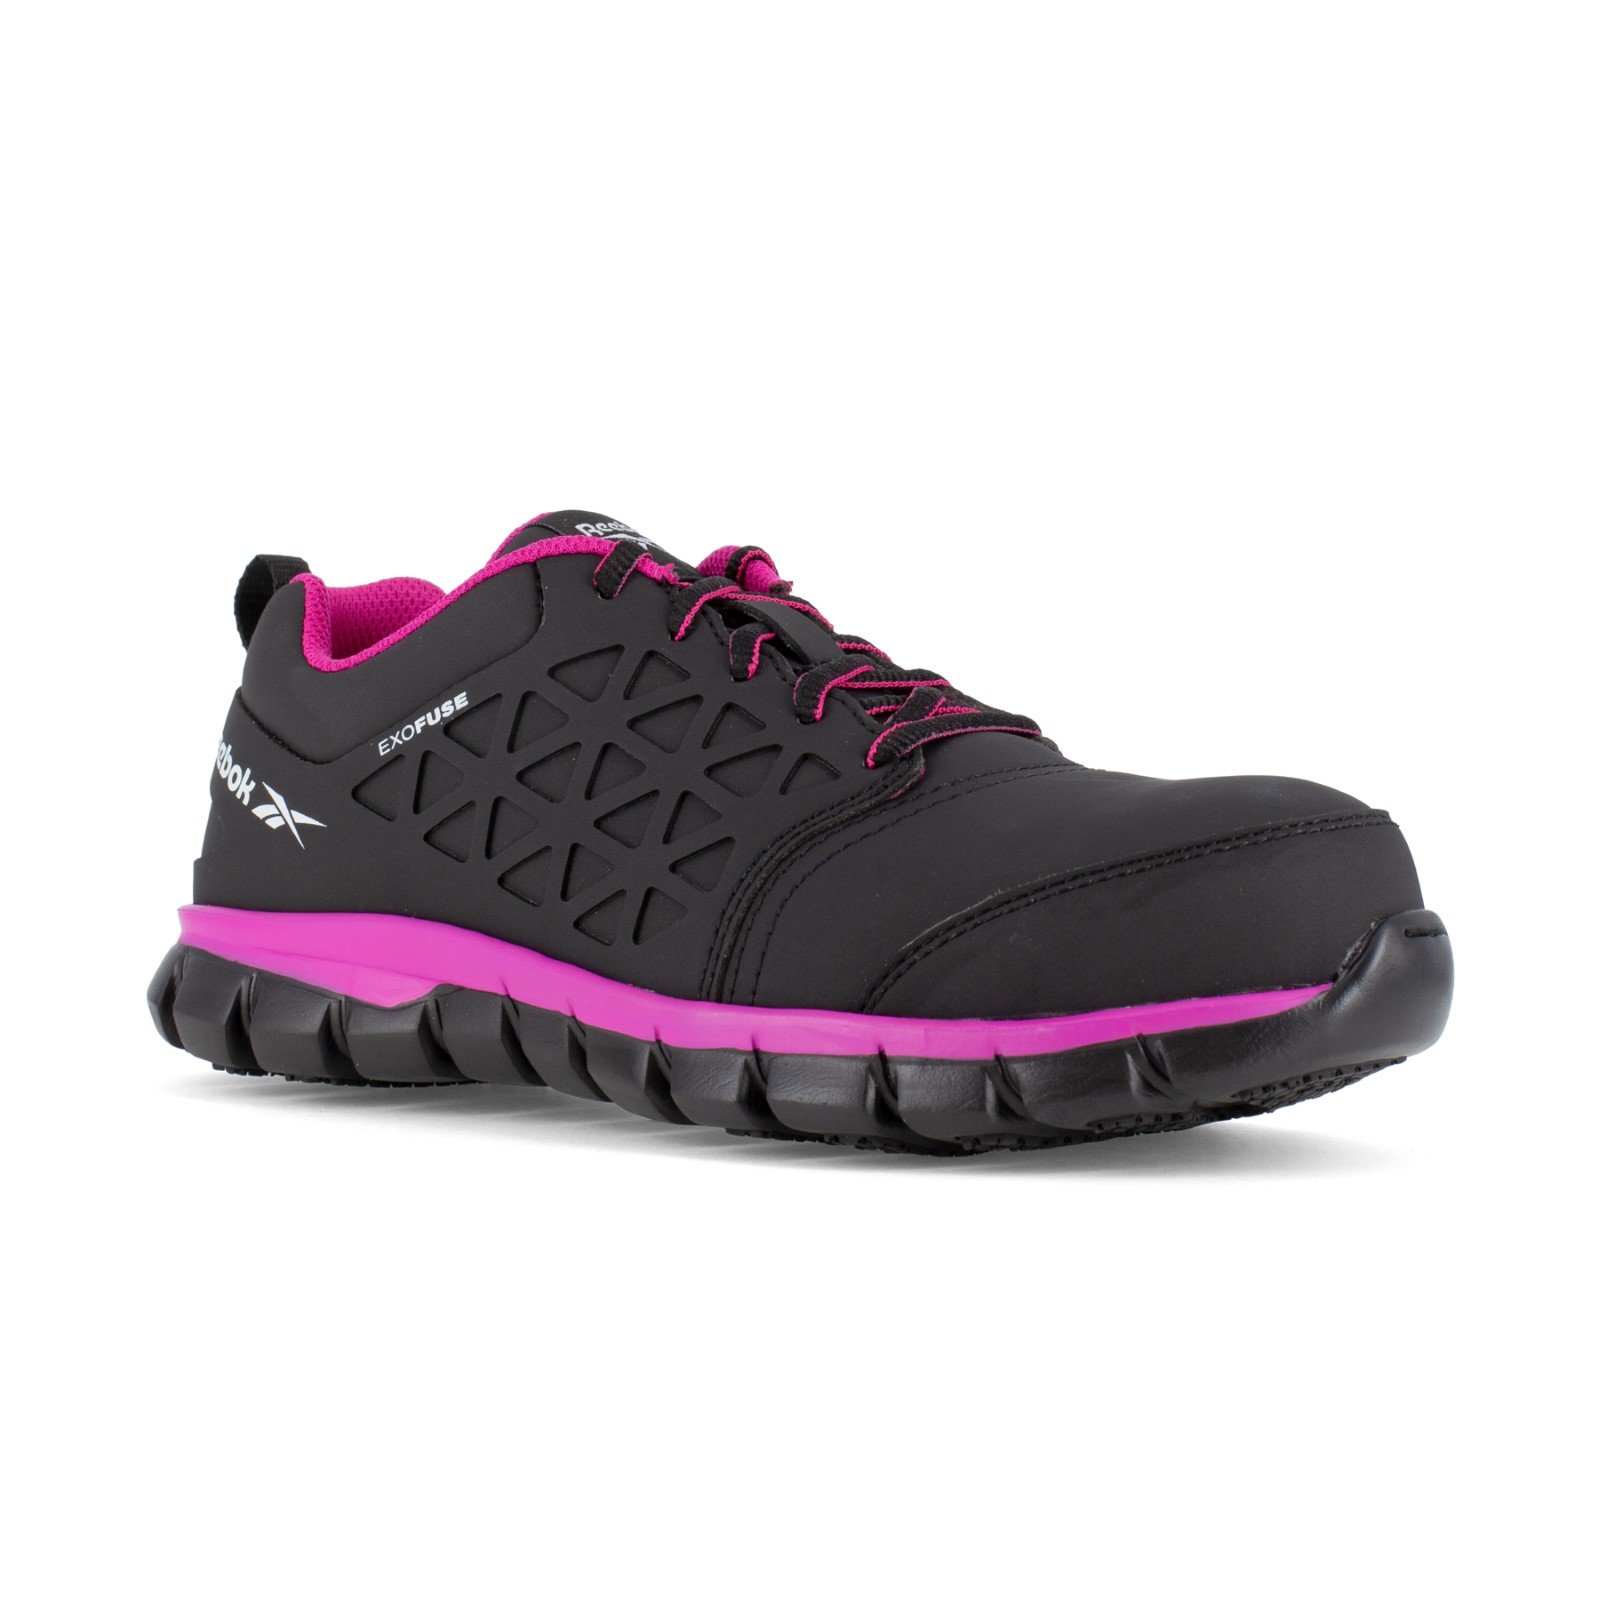 Reebok Women's Sublite Athletic Oxford Work Shoes - Steel Toe